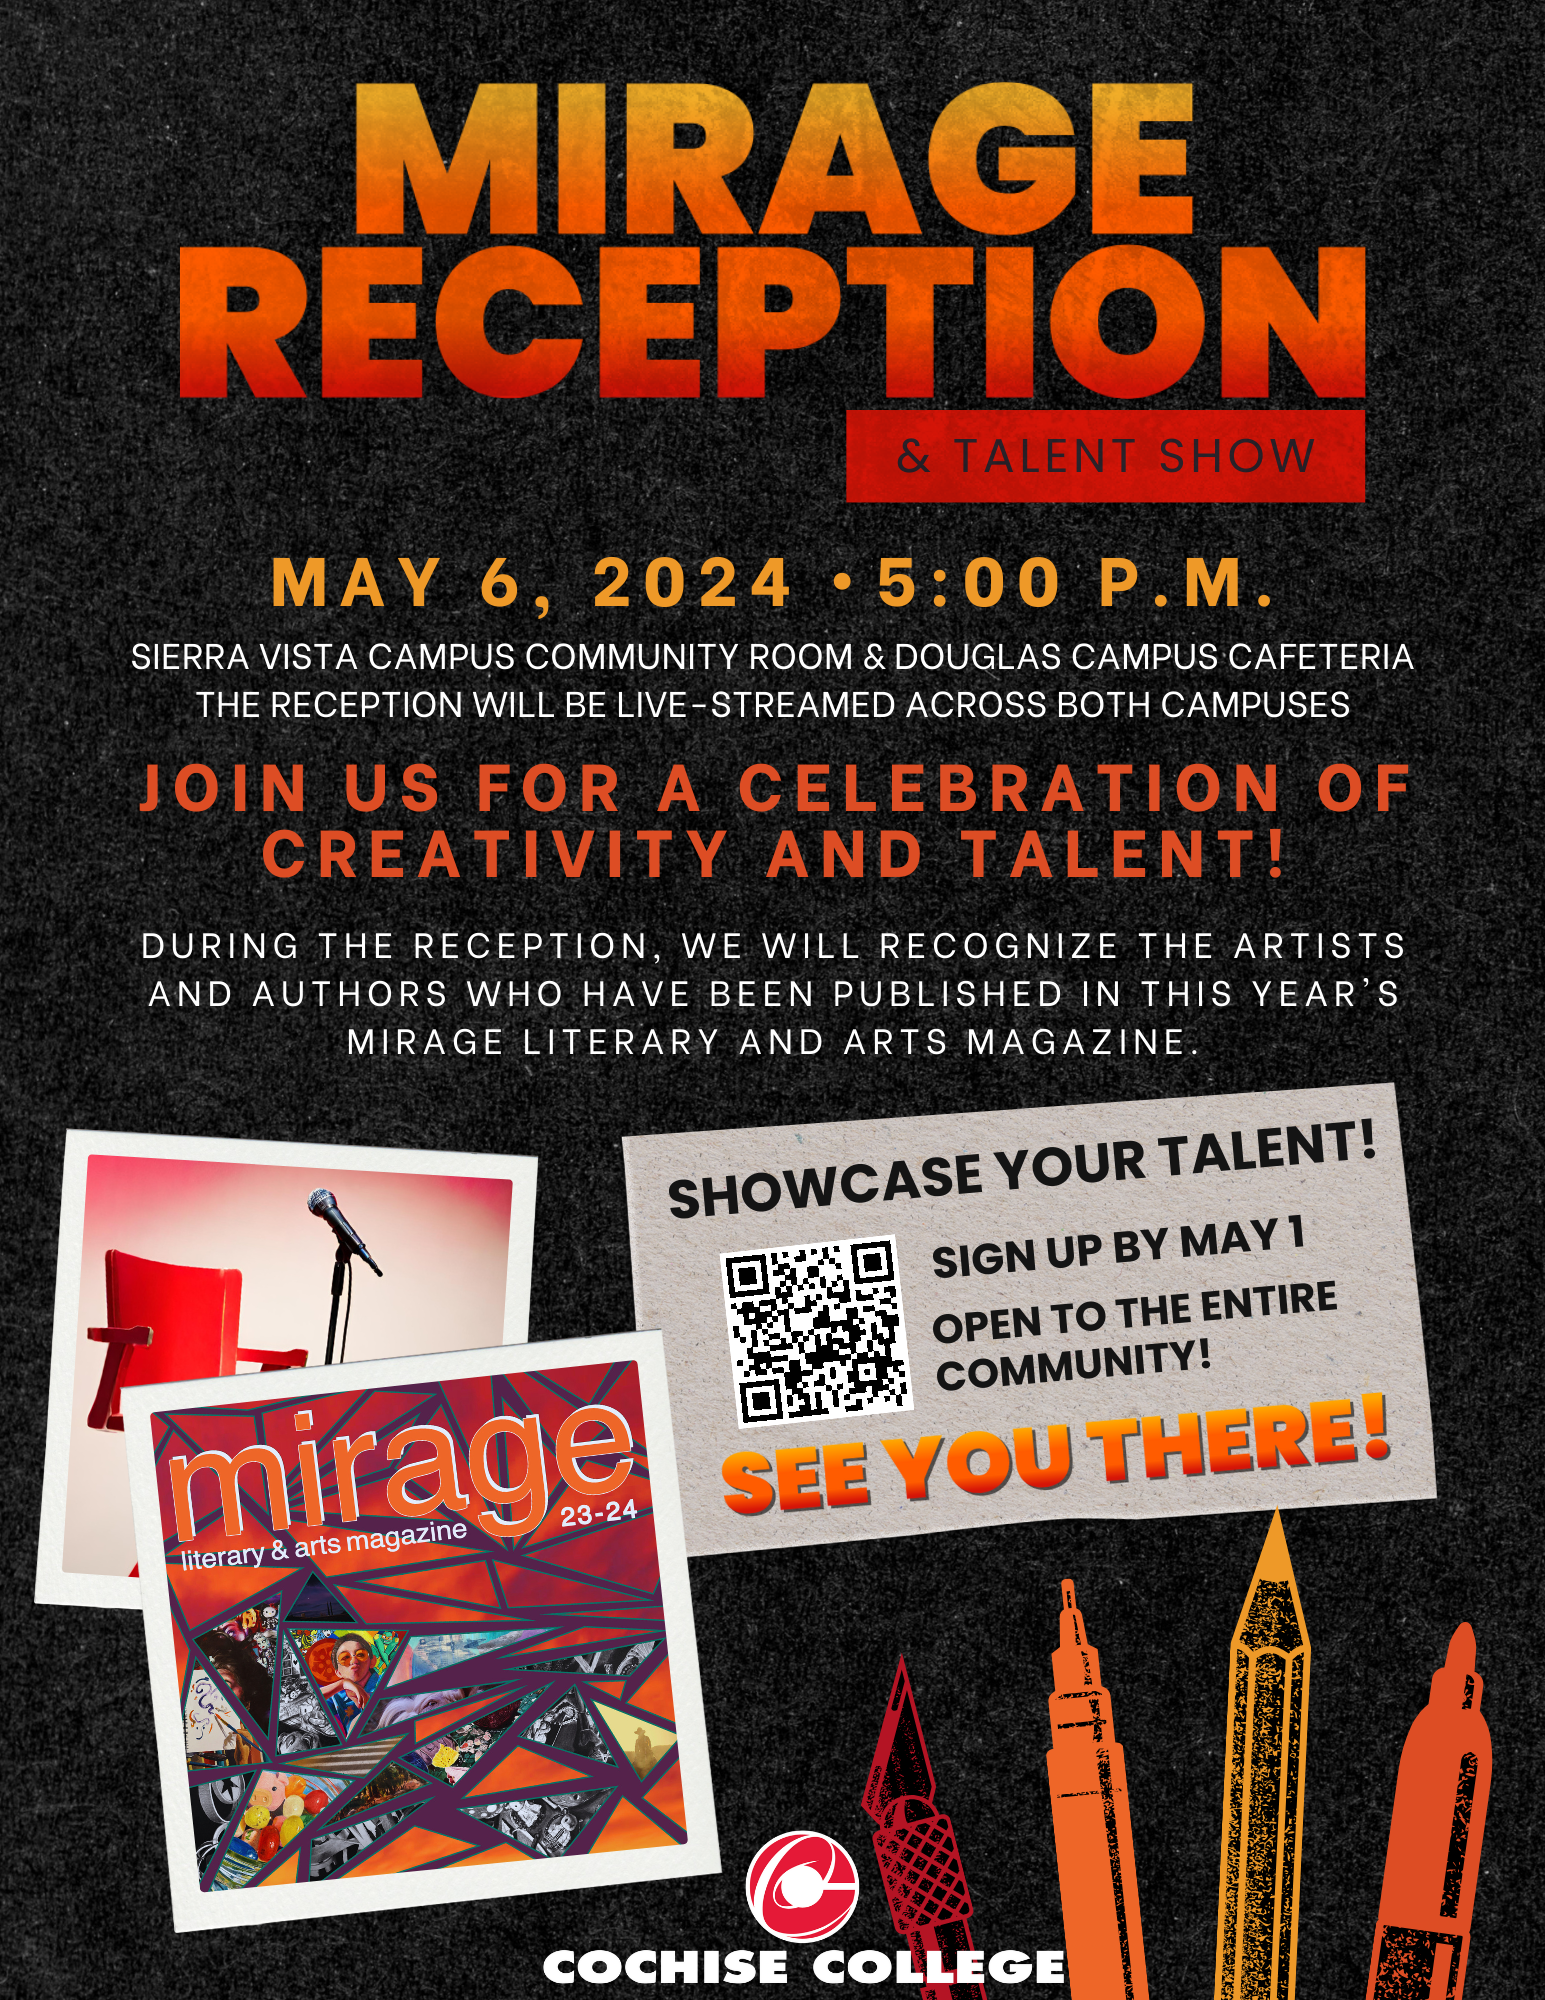 _Mirage Reception & Talent Show